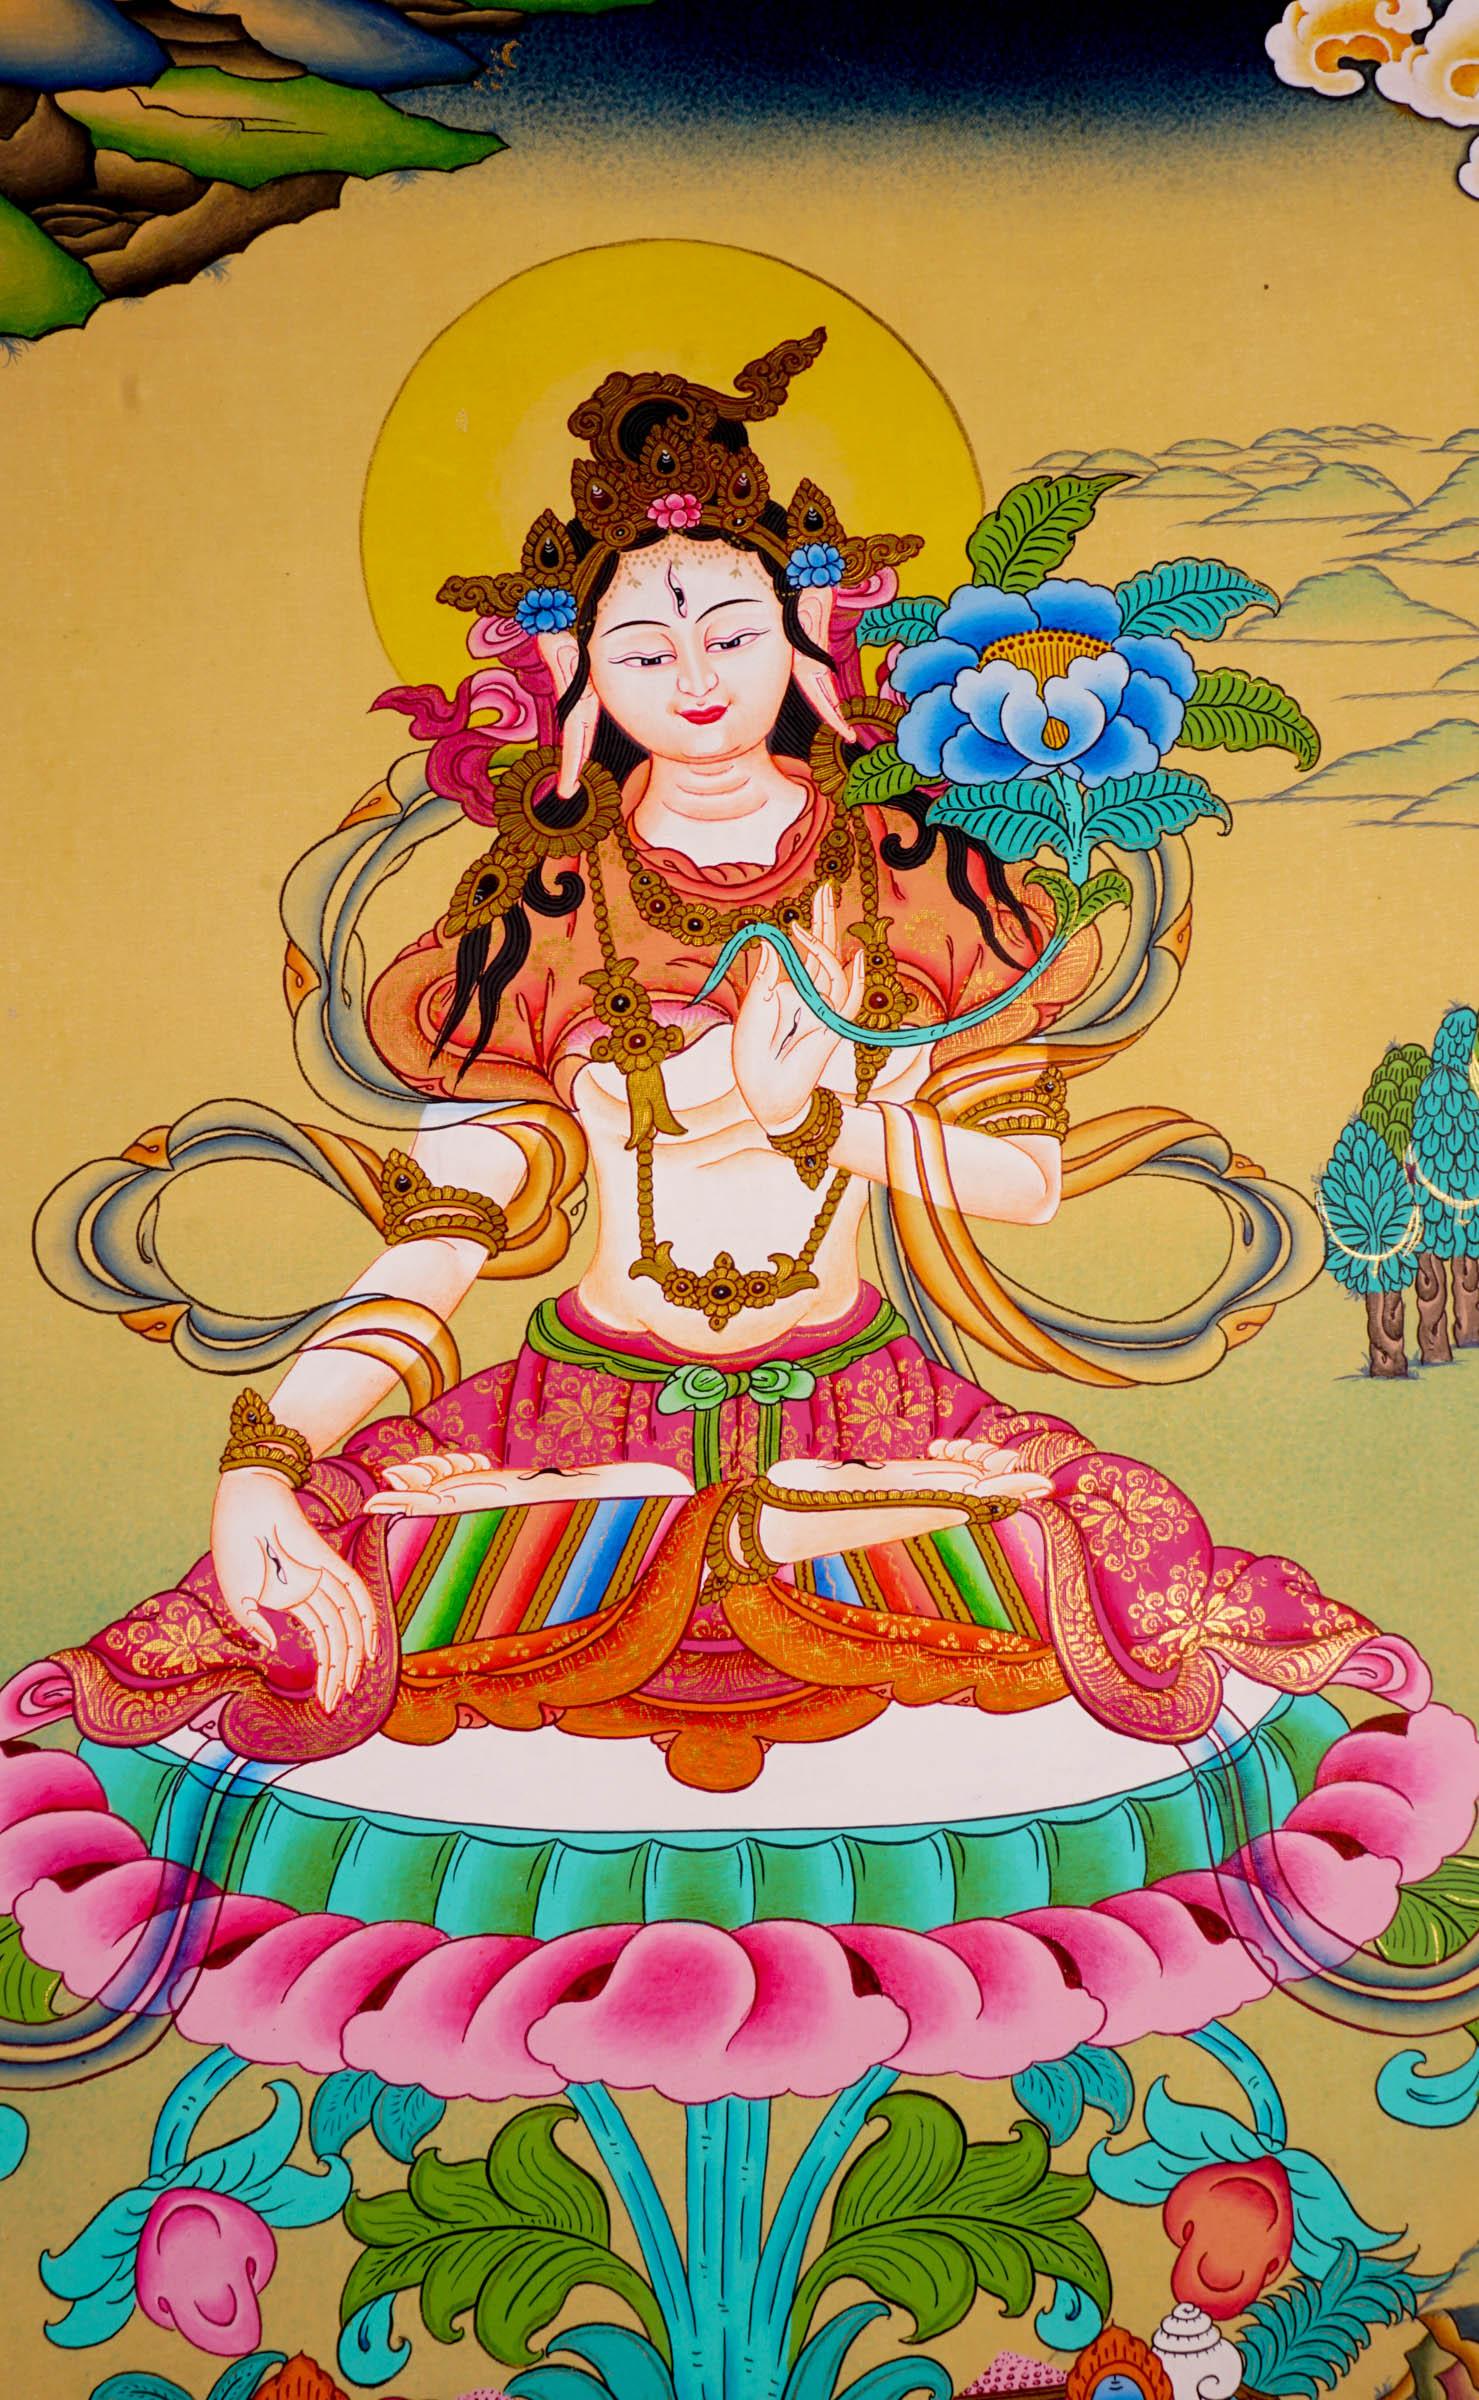 White Tara Tibetan Buddha Thangka painting on cotton canvas for spiritual and meditation practice